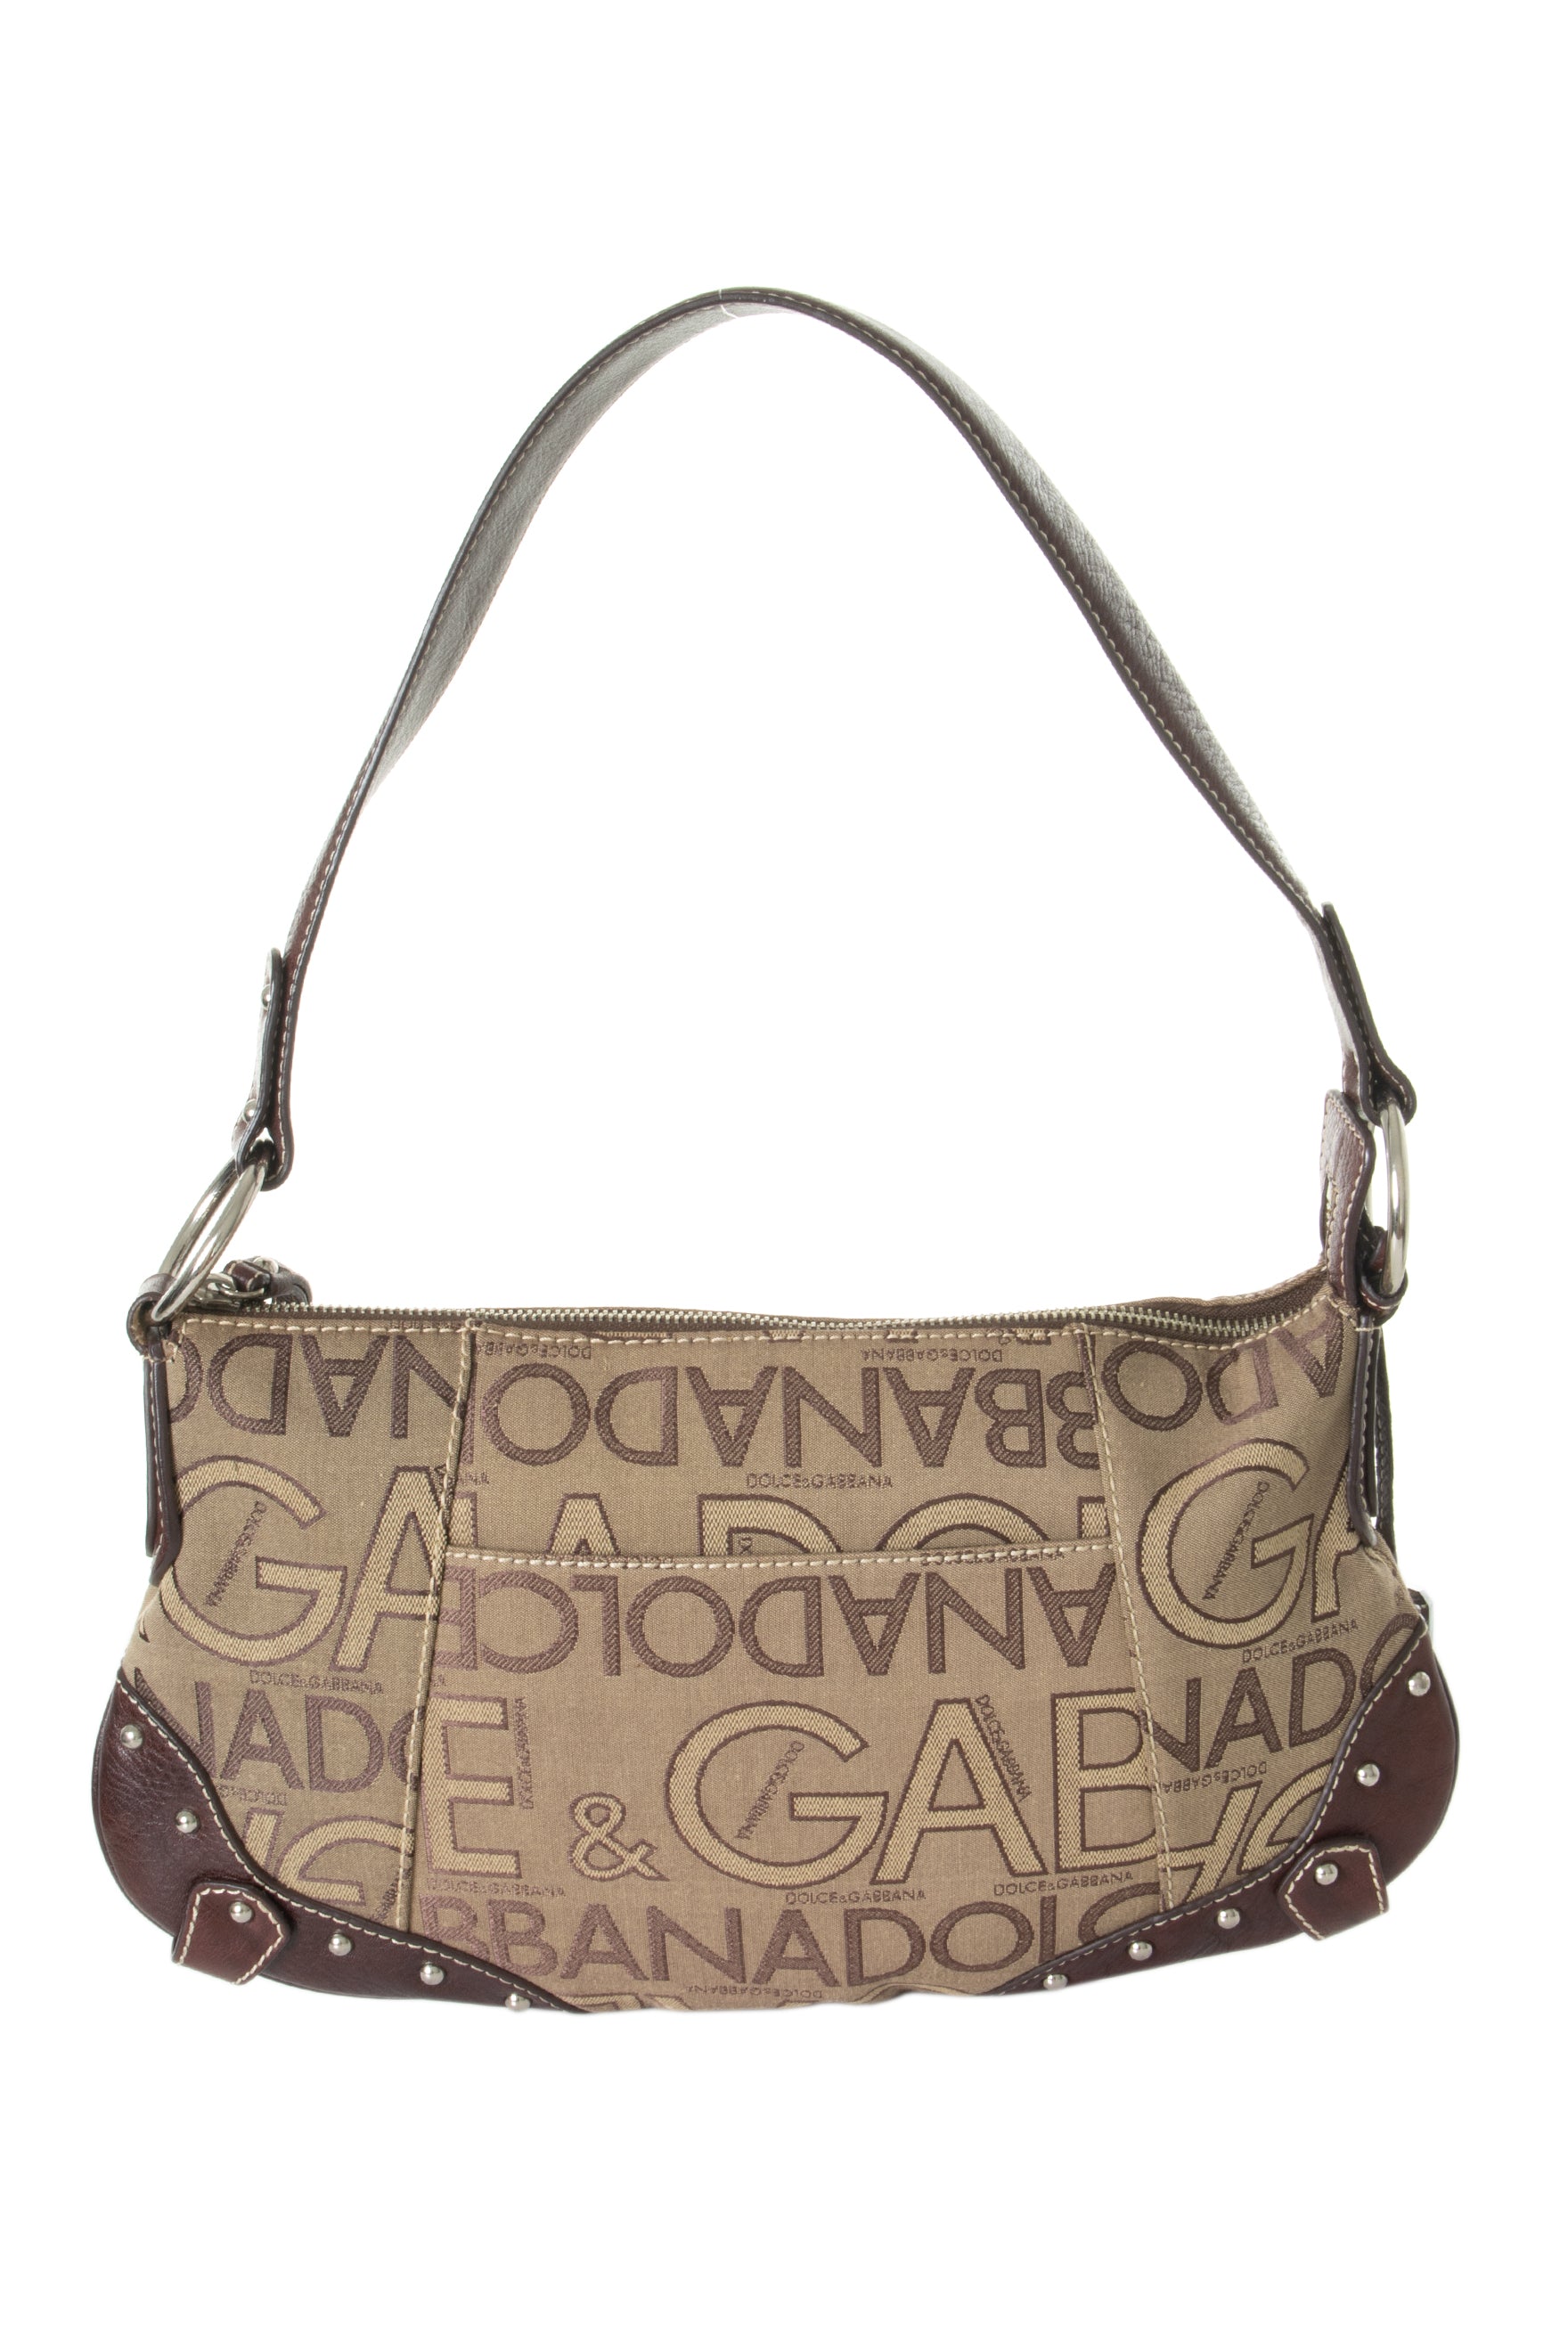 Dolce and Gabbana Monogram Bag   irvrsbl